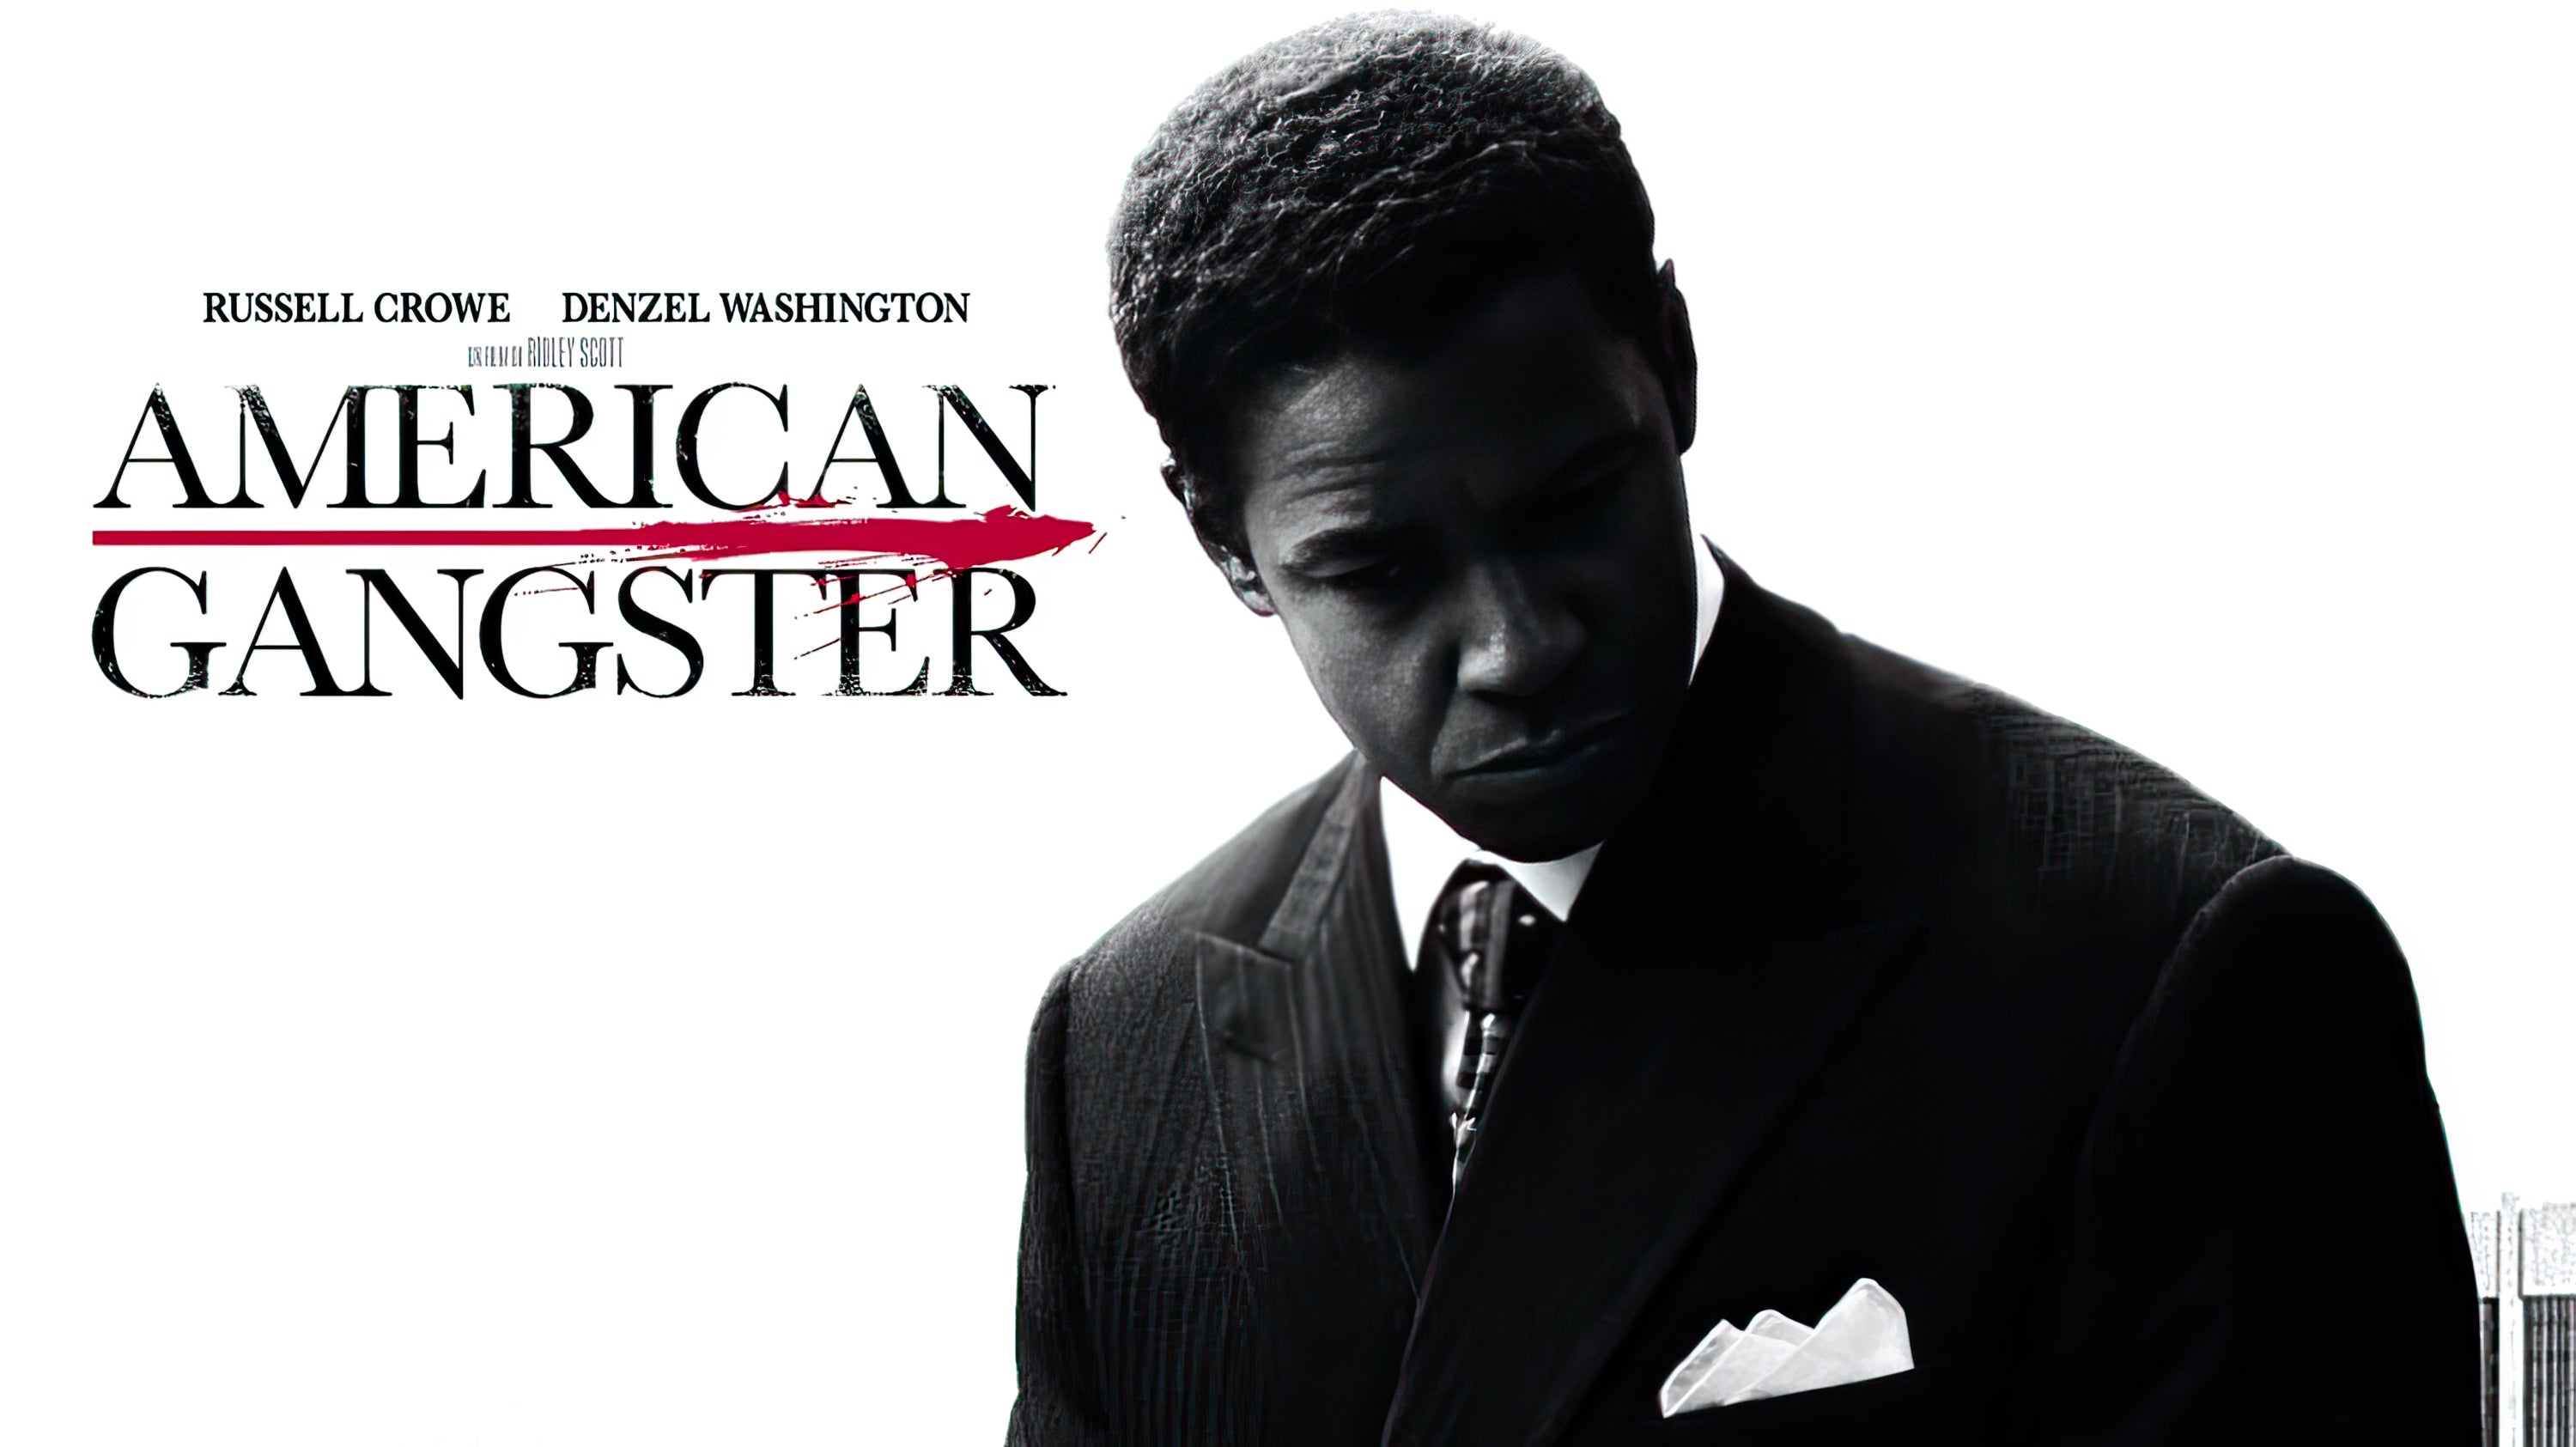 American Gangster Script Screenplay - Image of Movie Poster